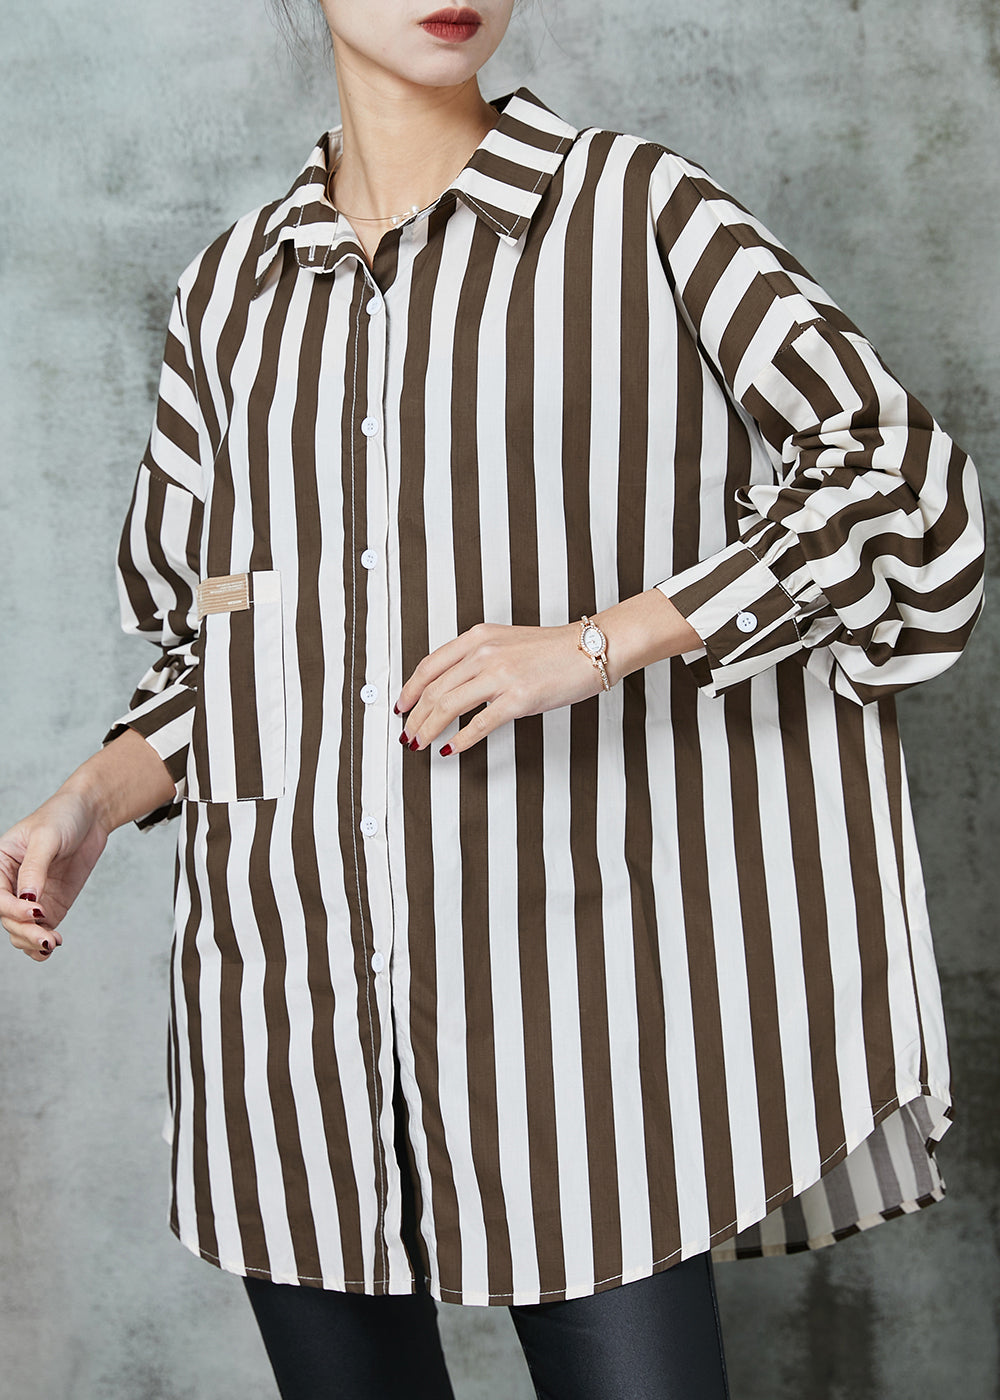 Chic Khaki Oversized Striped Cotton Shirt Tops Spring